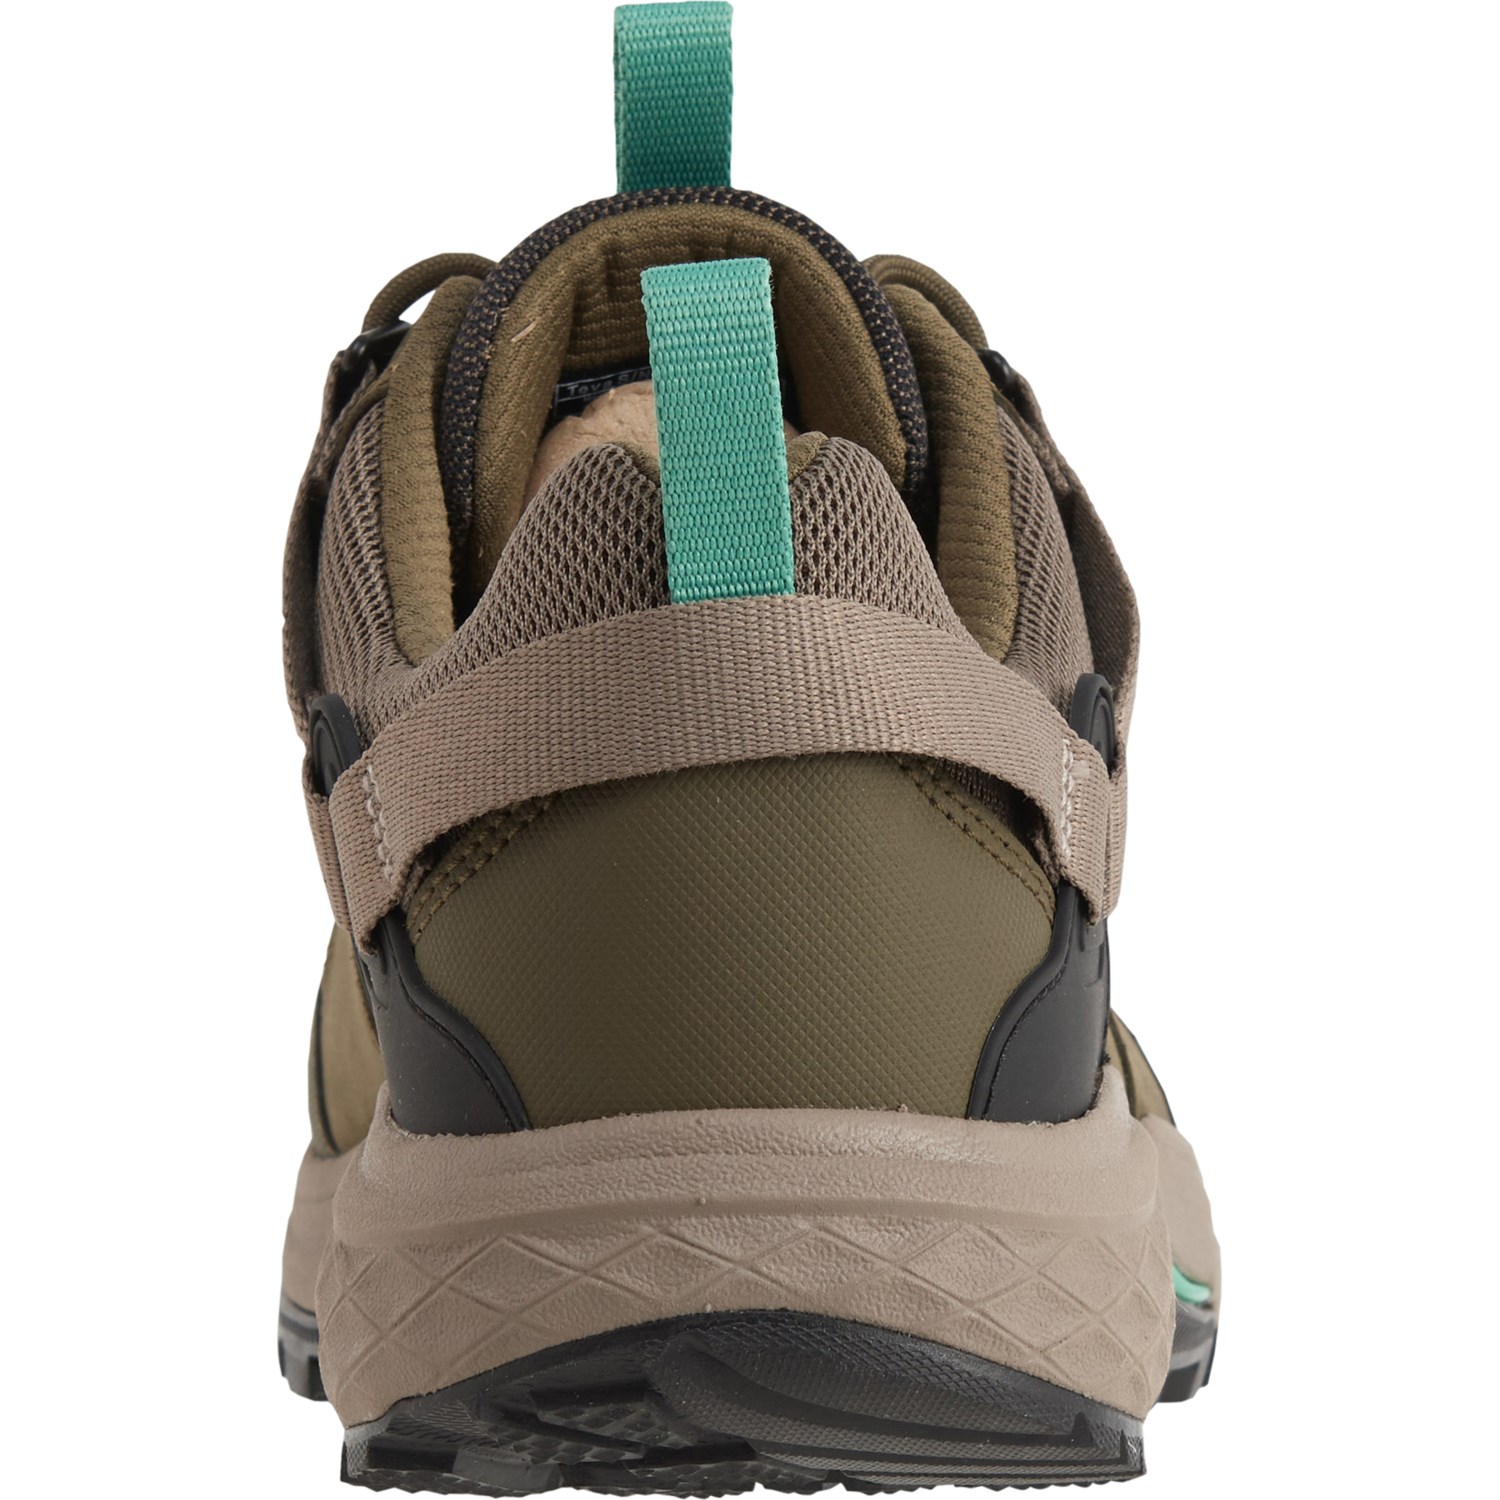 Teva Grandview Gore-Tex® Low Hiking Shoes (For Women) - Save 62%